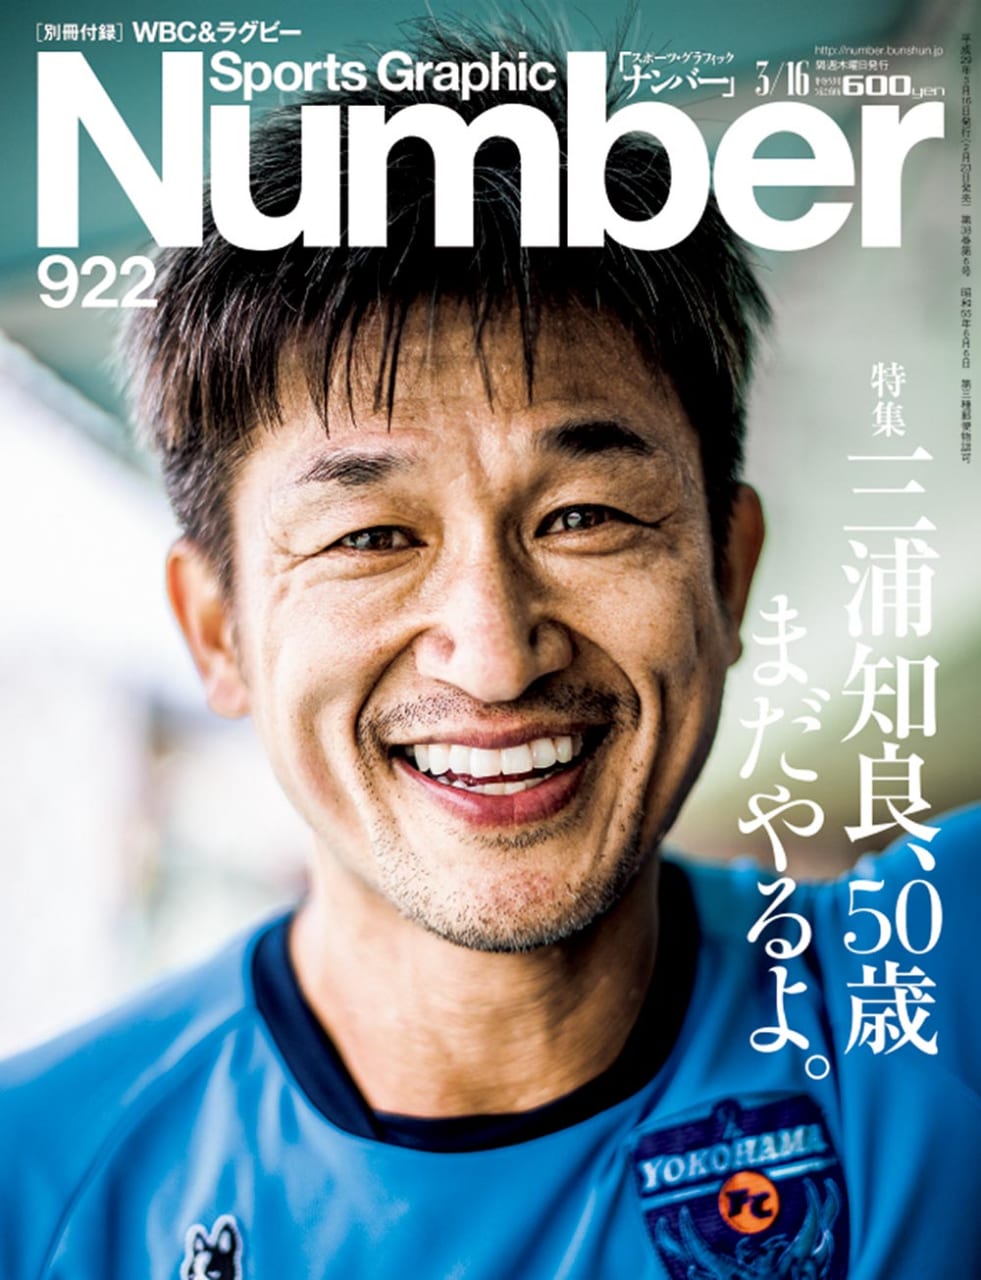 Sports Graphic Number 922号
2017年2月23日発売
表紙撮影：近藤篤